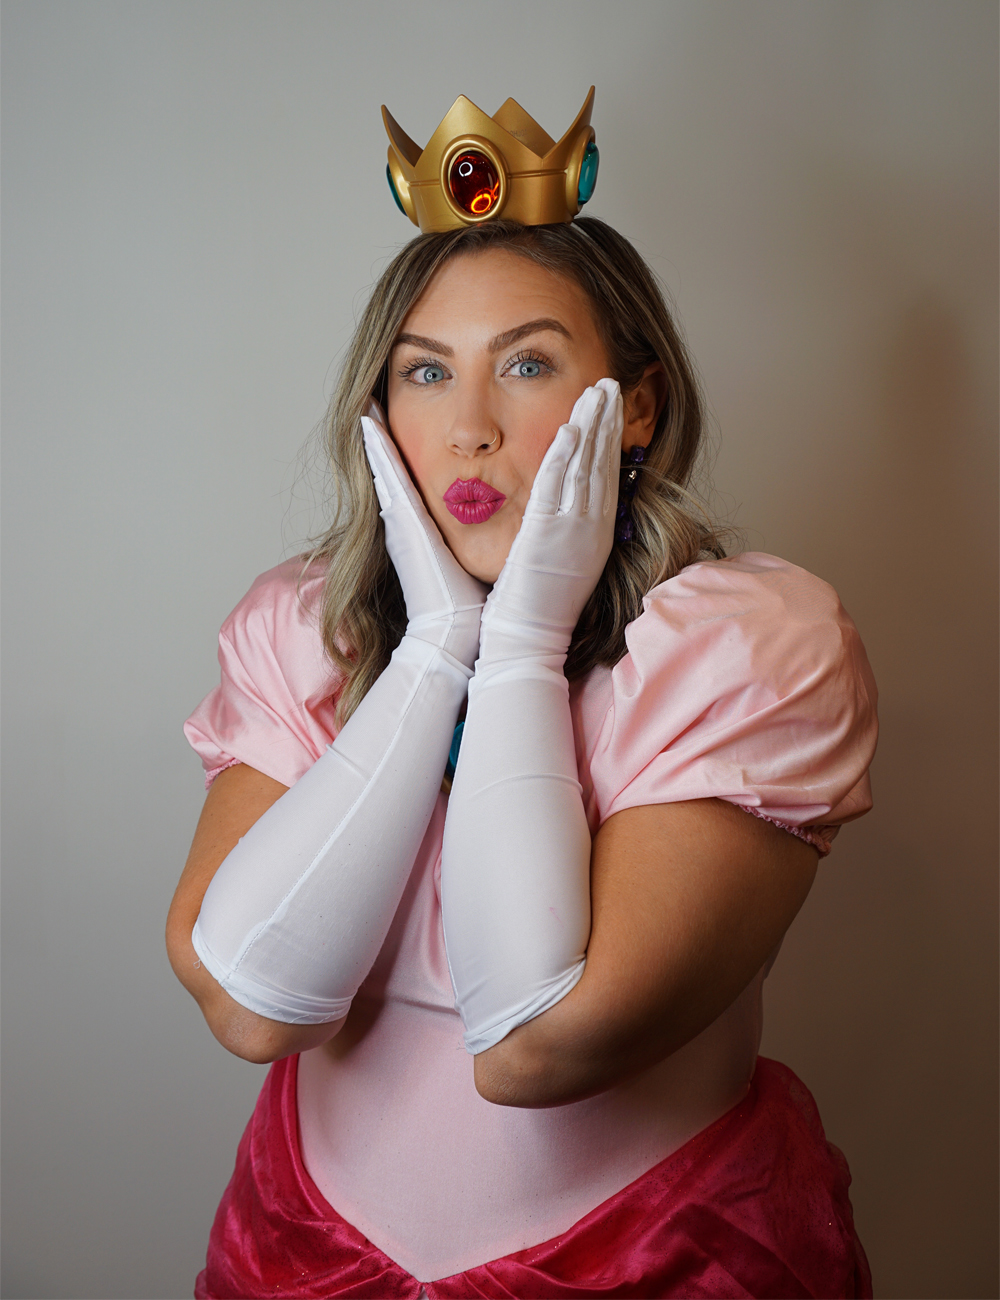 Princess Peach Halloween costume idea for MarioKart fans